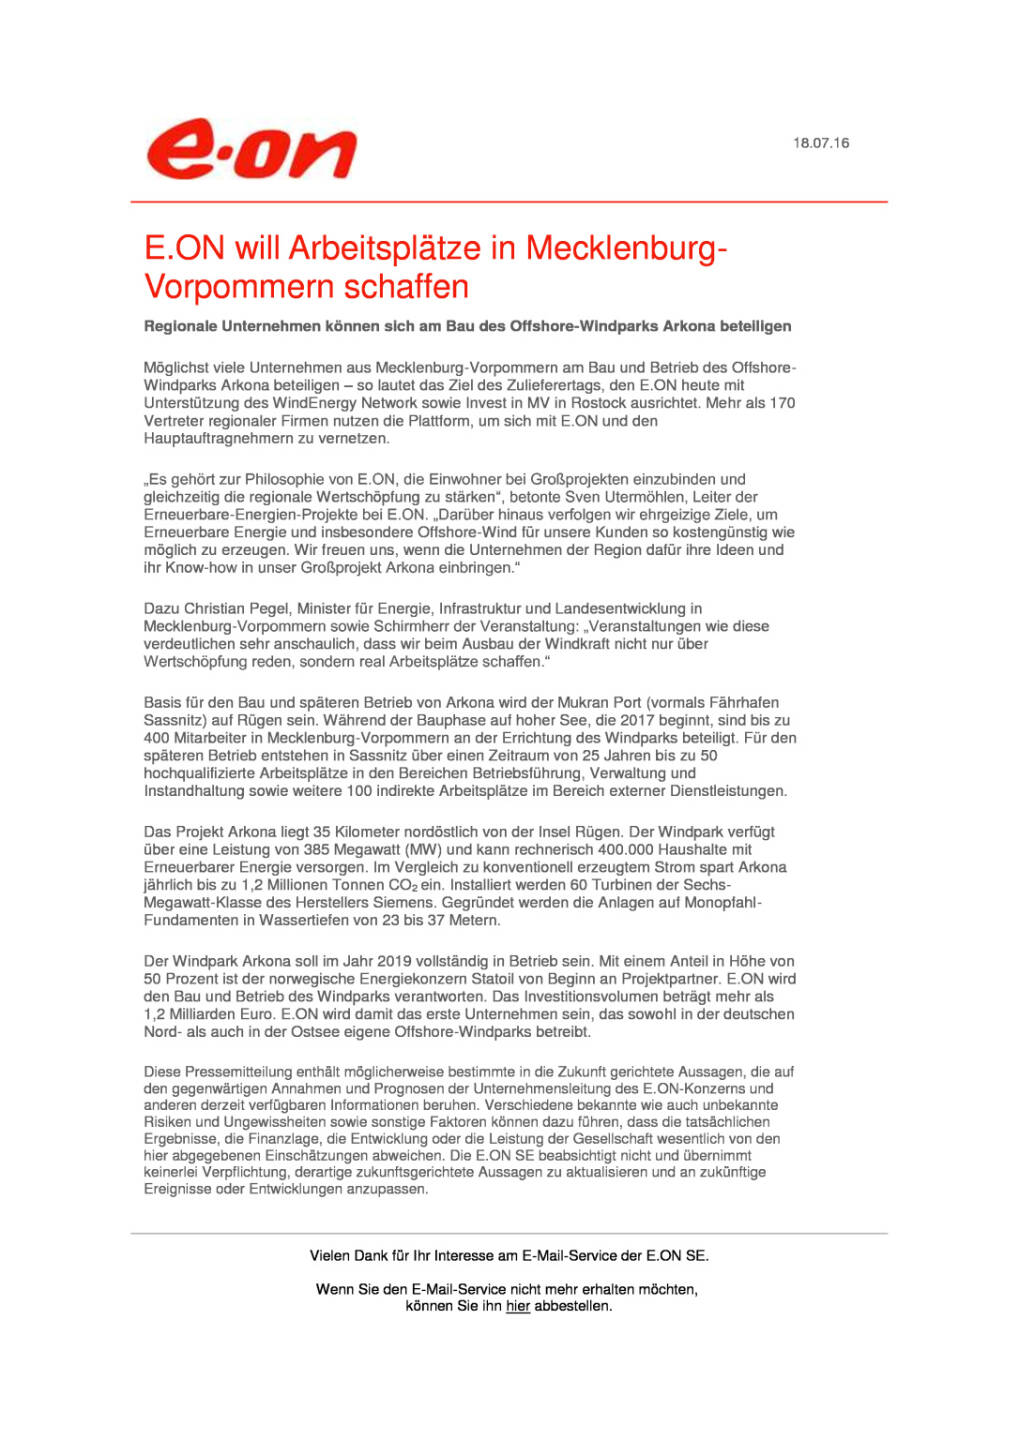 E.ON: Arbeitsplätze in Mecklenburg-Vorpommern , Seite 1/1, komplettes Dokument unter http://boerse-social.com/static/uploads/file_1433_eon_arbeitsplatze_in_mecklenburg-vorpommern.pdf